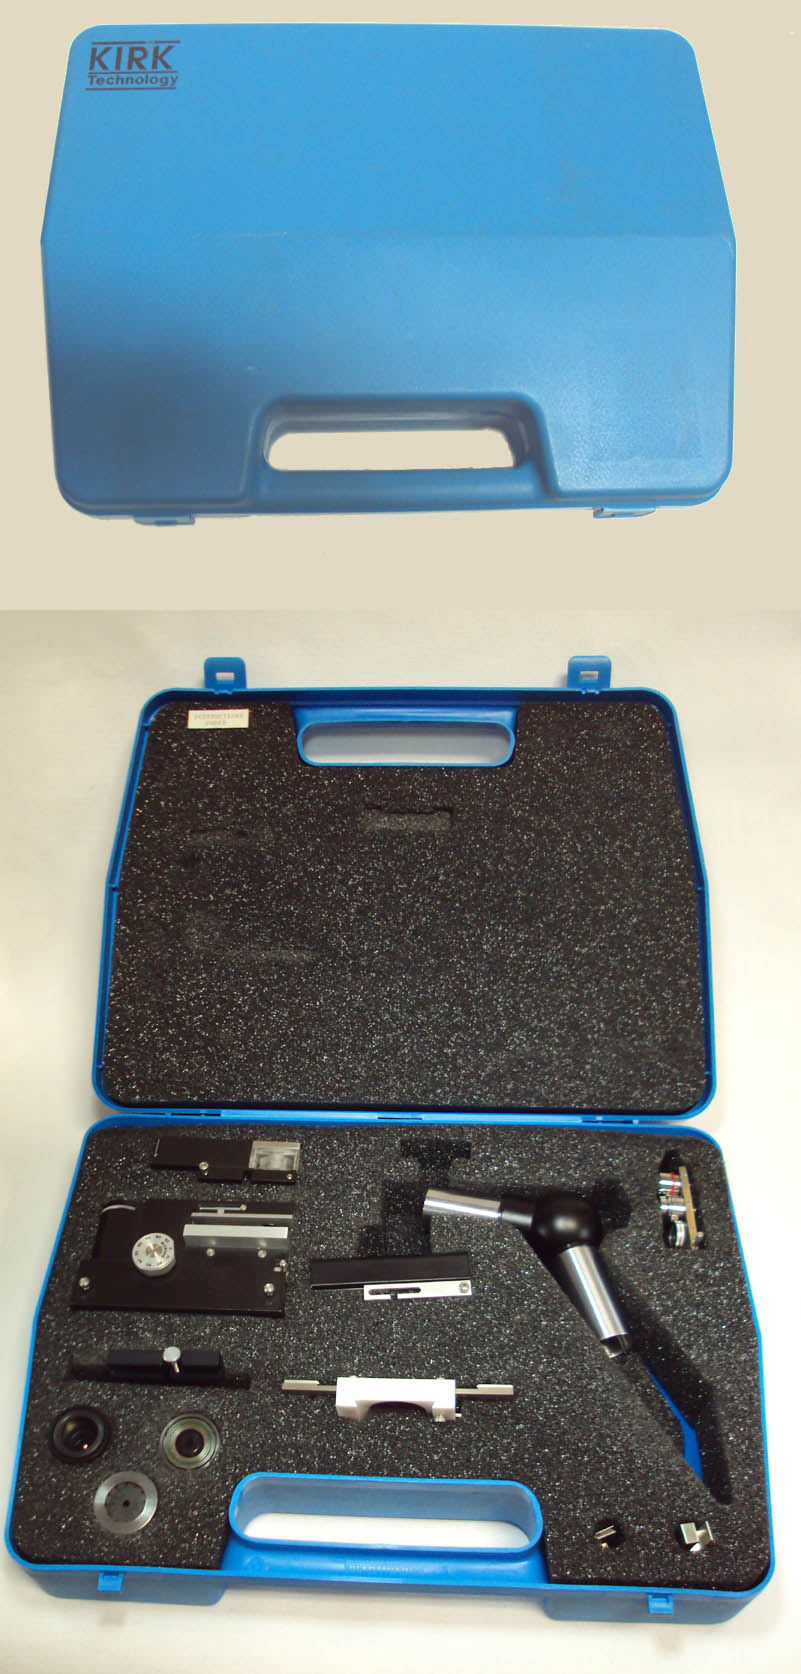 Kirk-McArthur Portable  Microscope Accessories Case